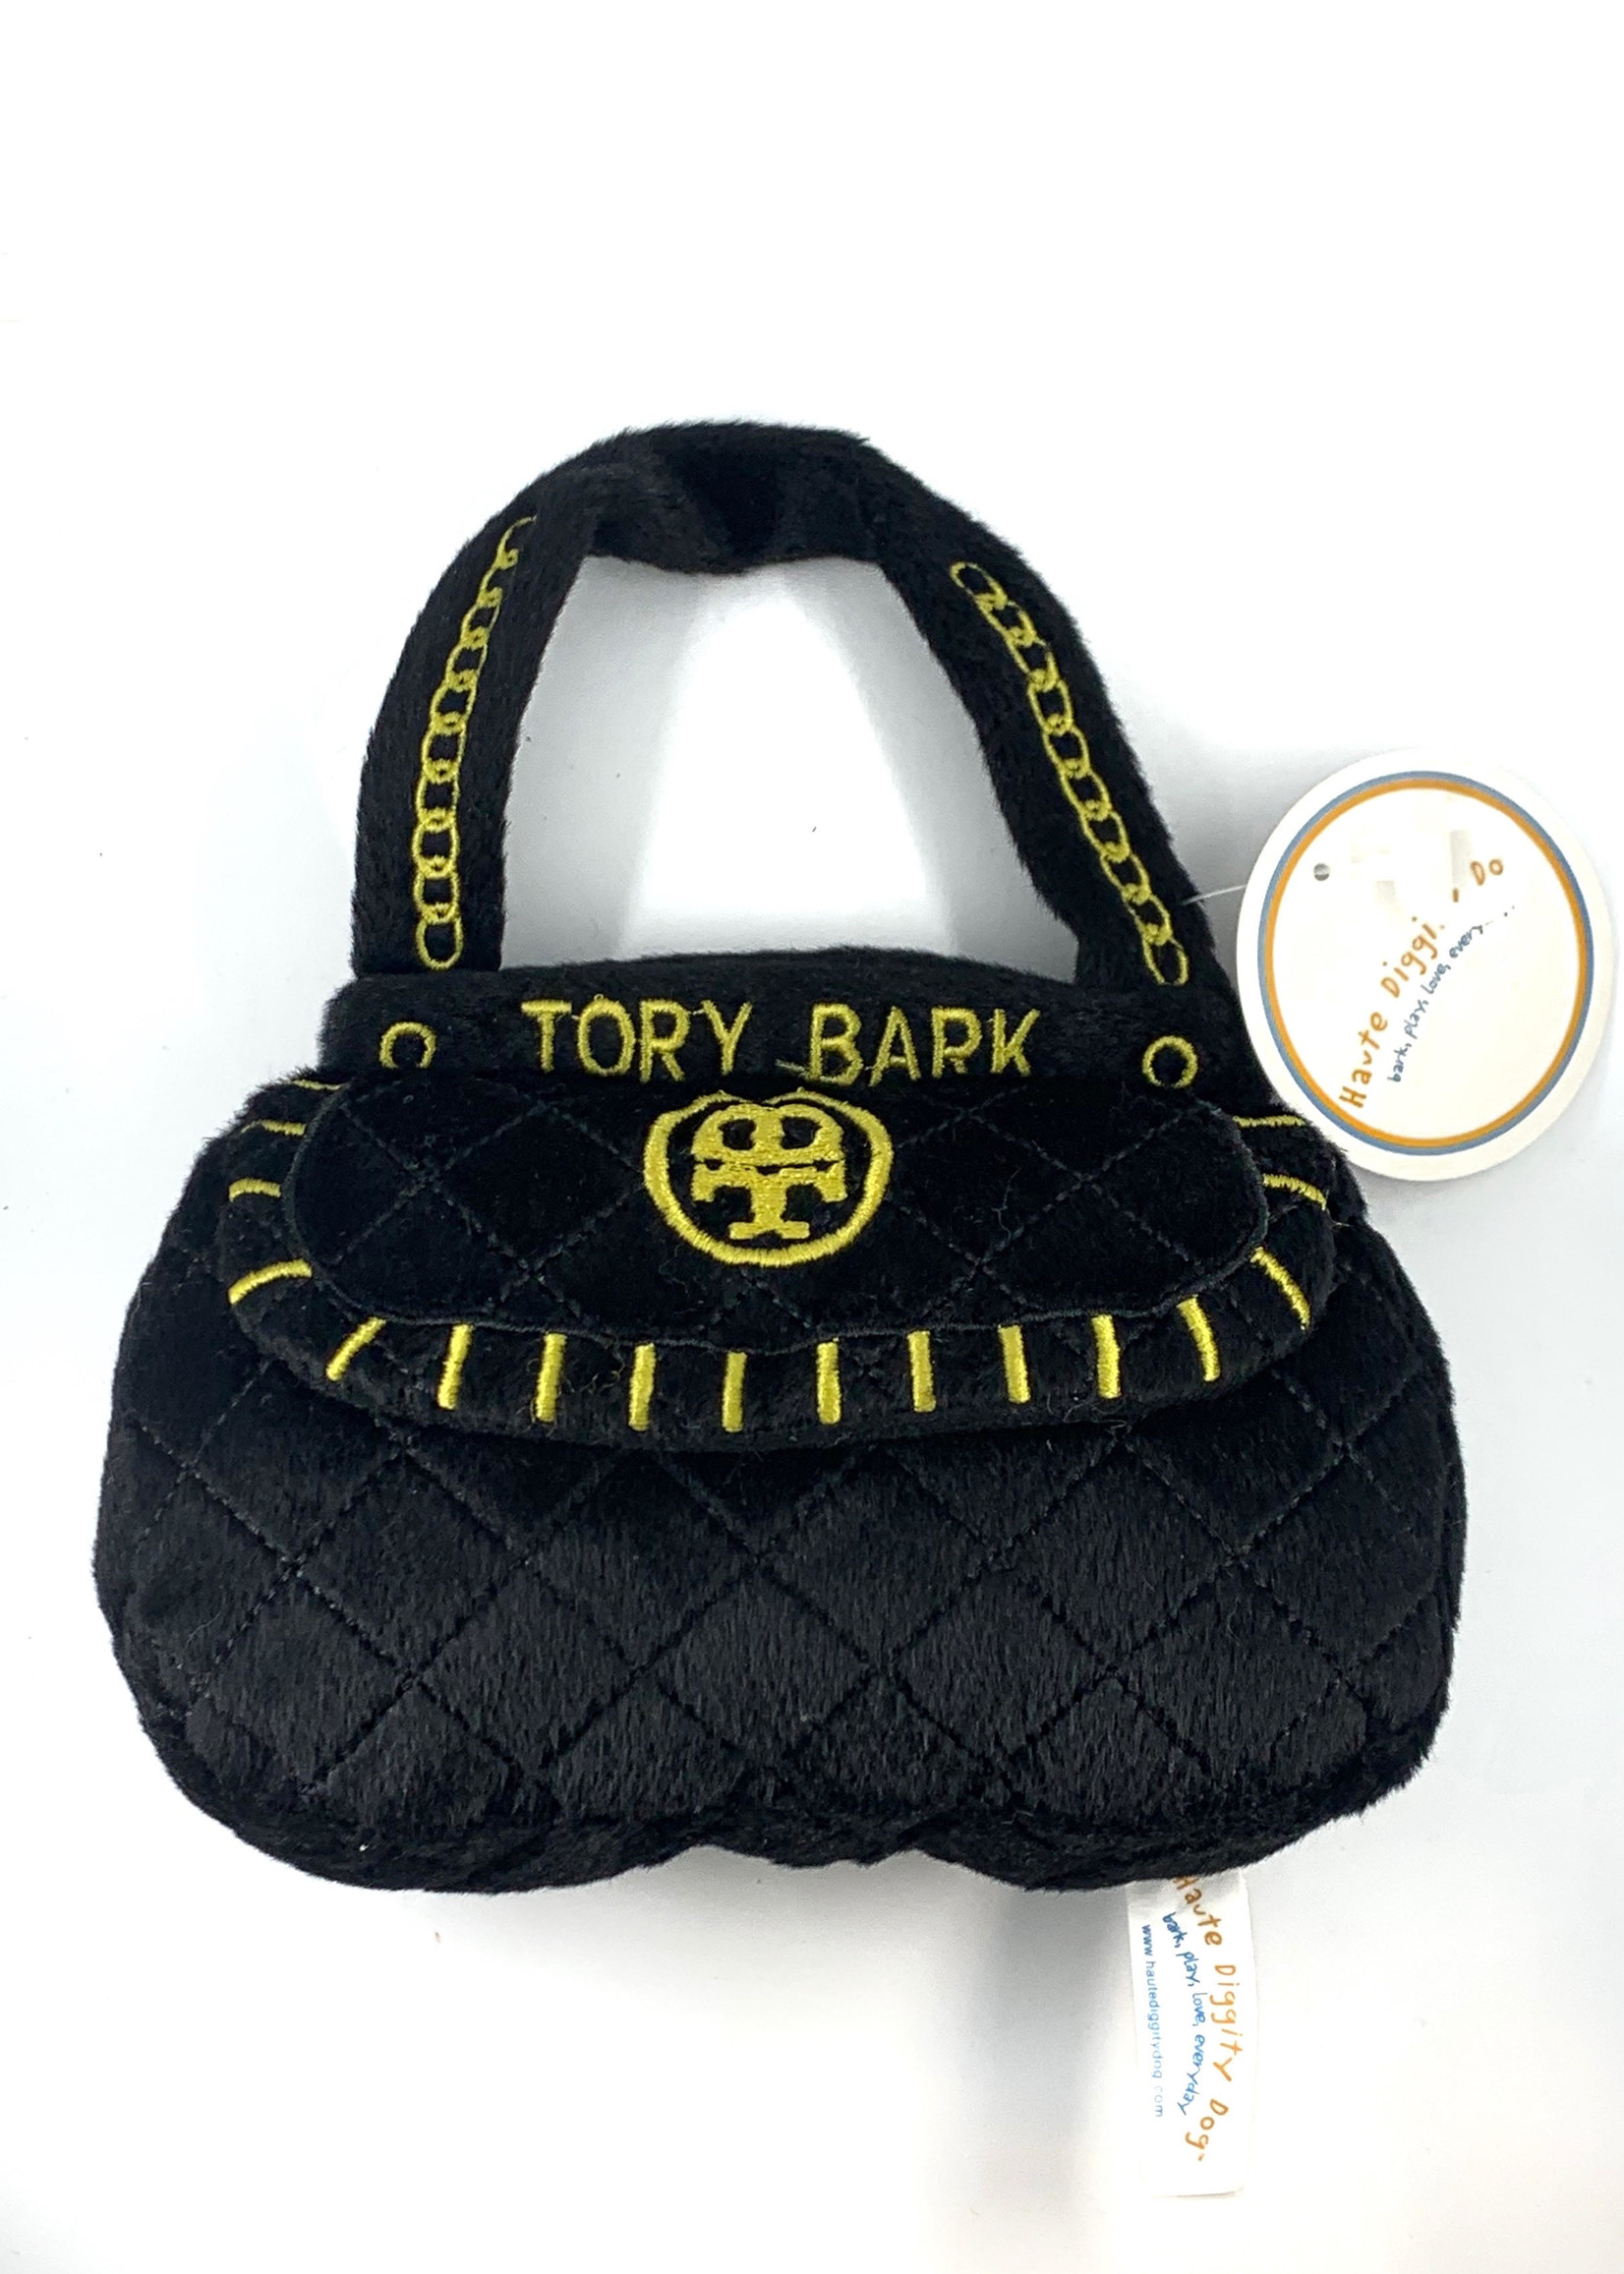 Haute Diggity Dog Tory Bark-Black Handbag